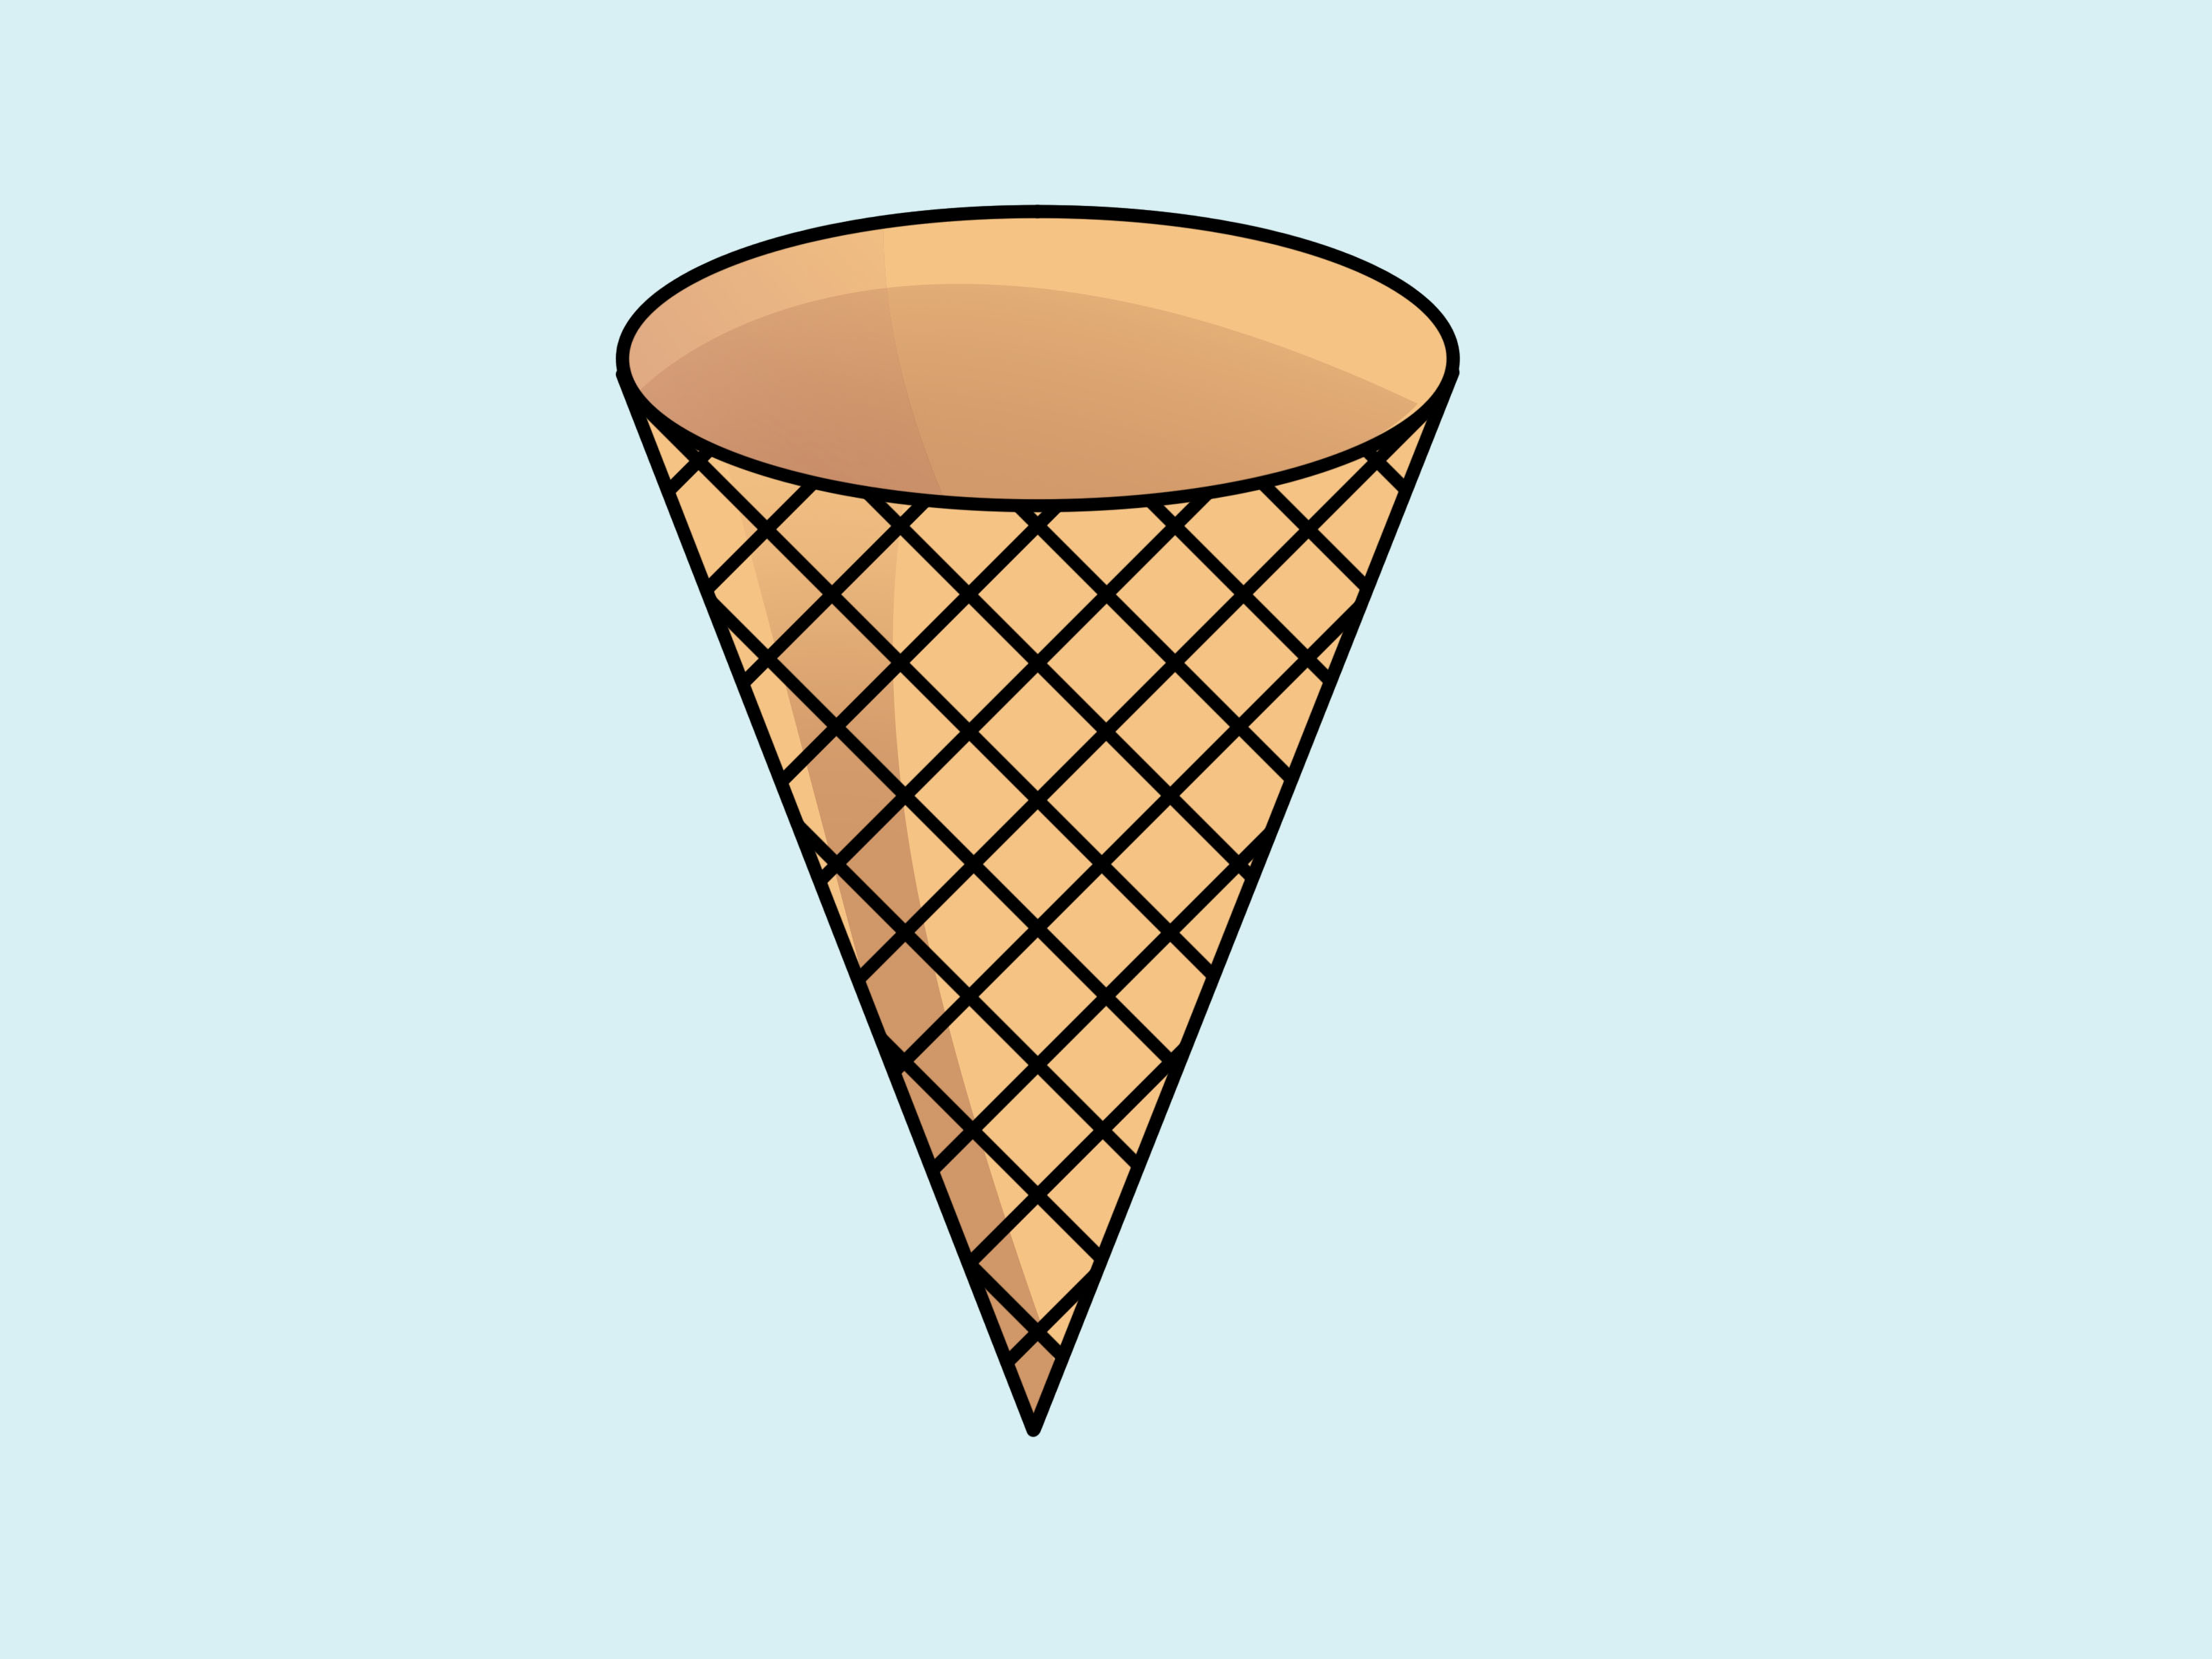 Ice cream cone drawing clipart